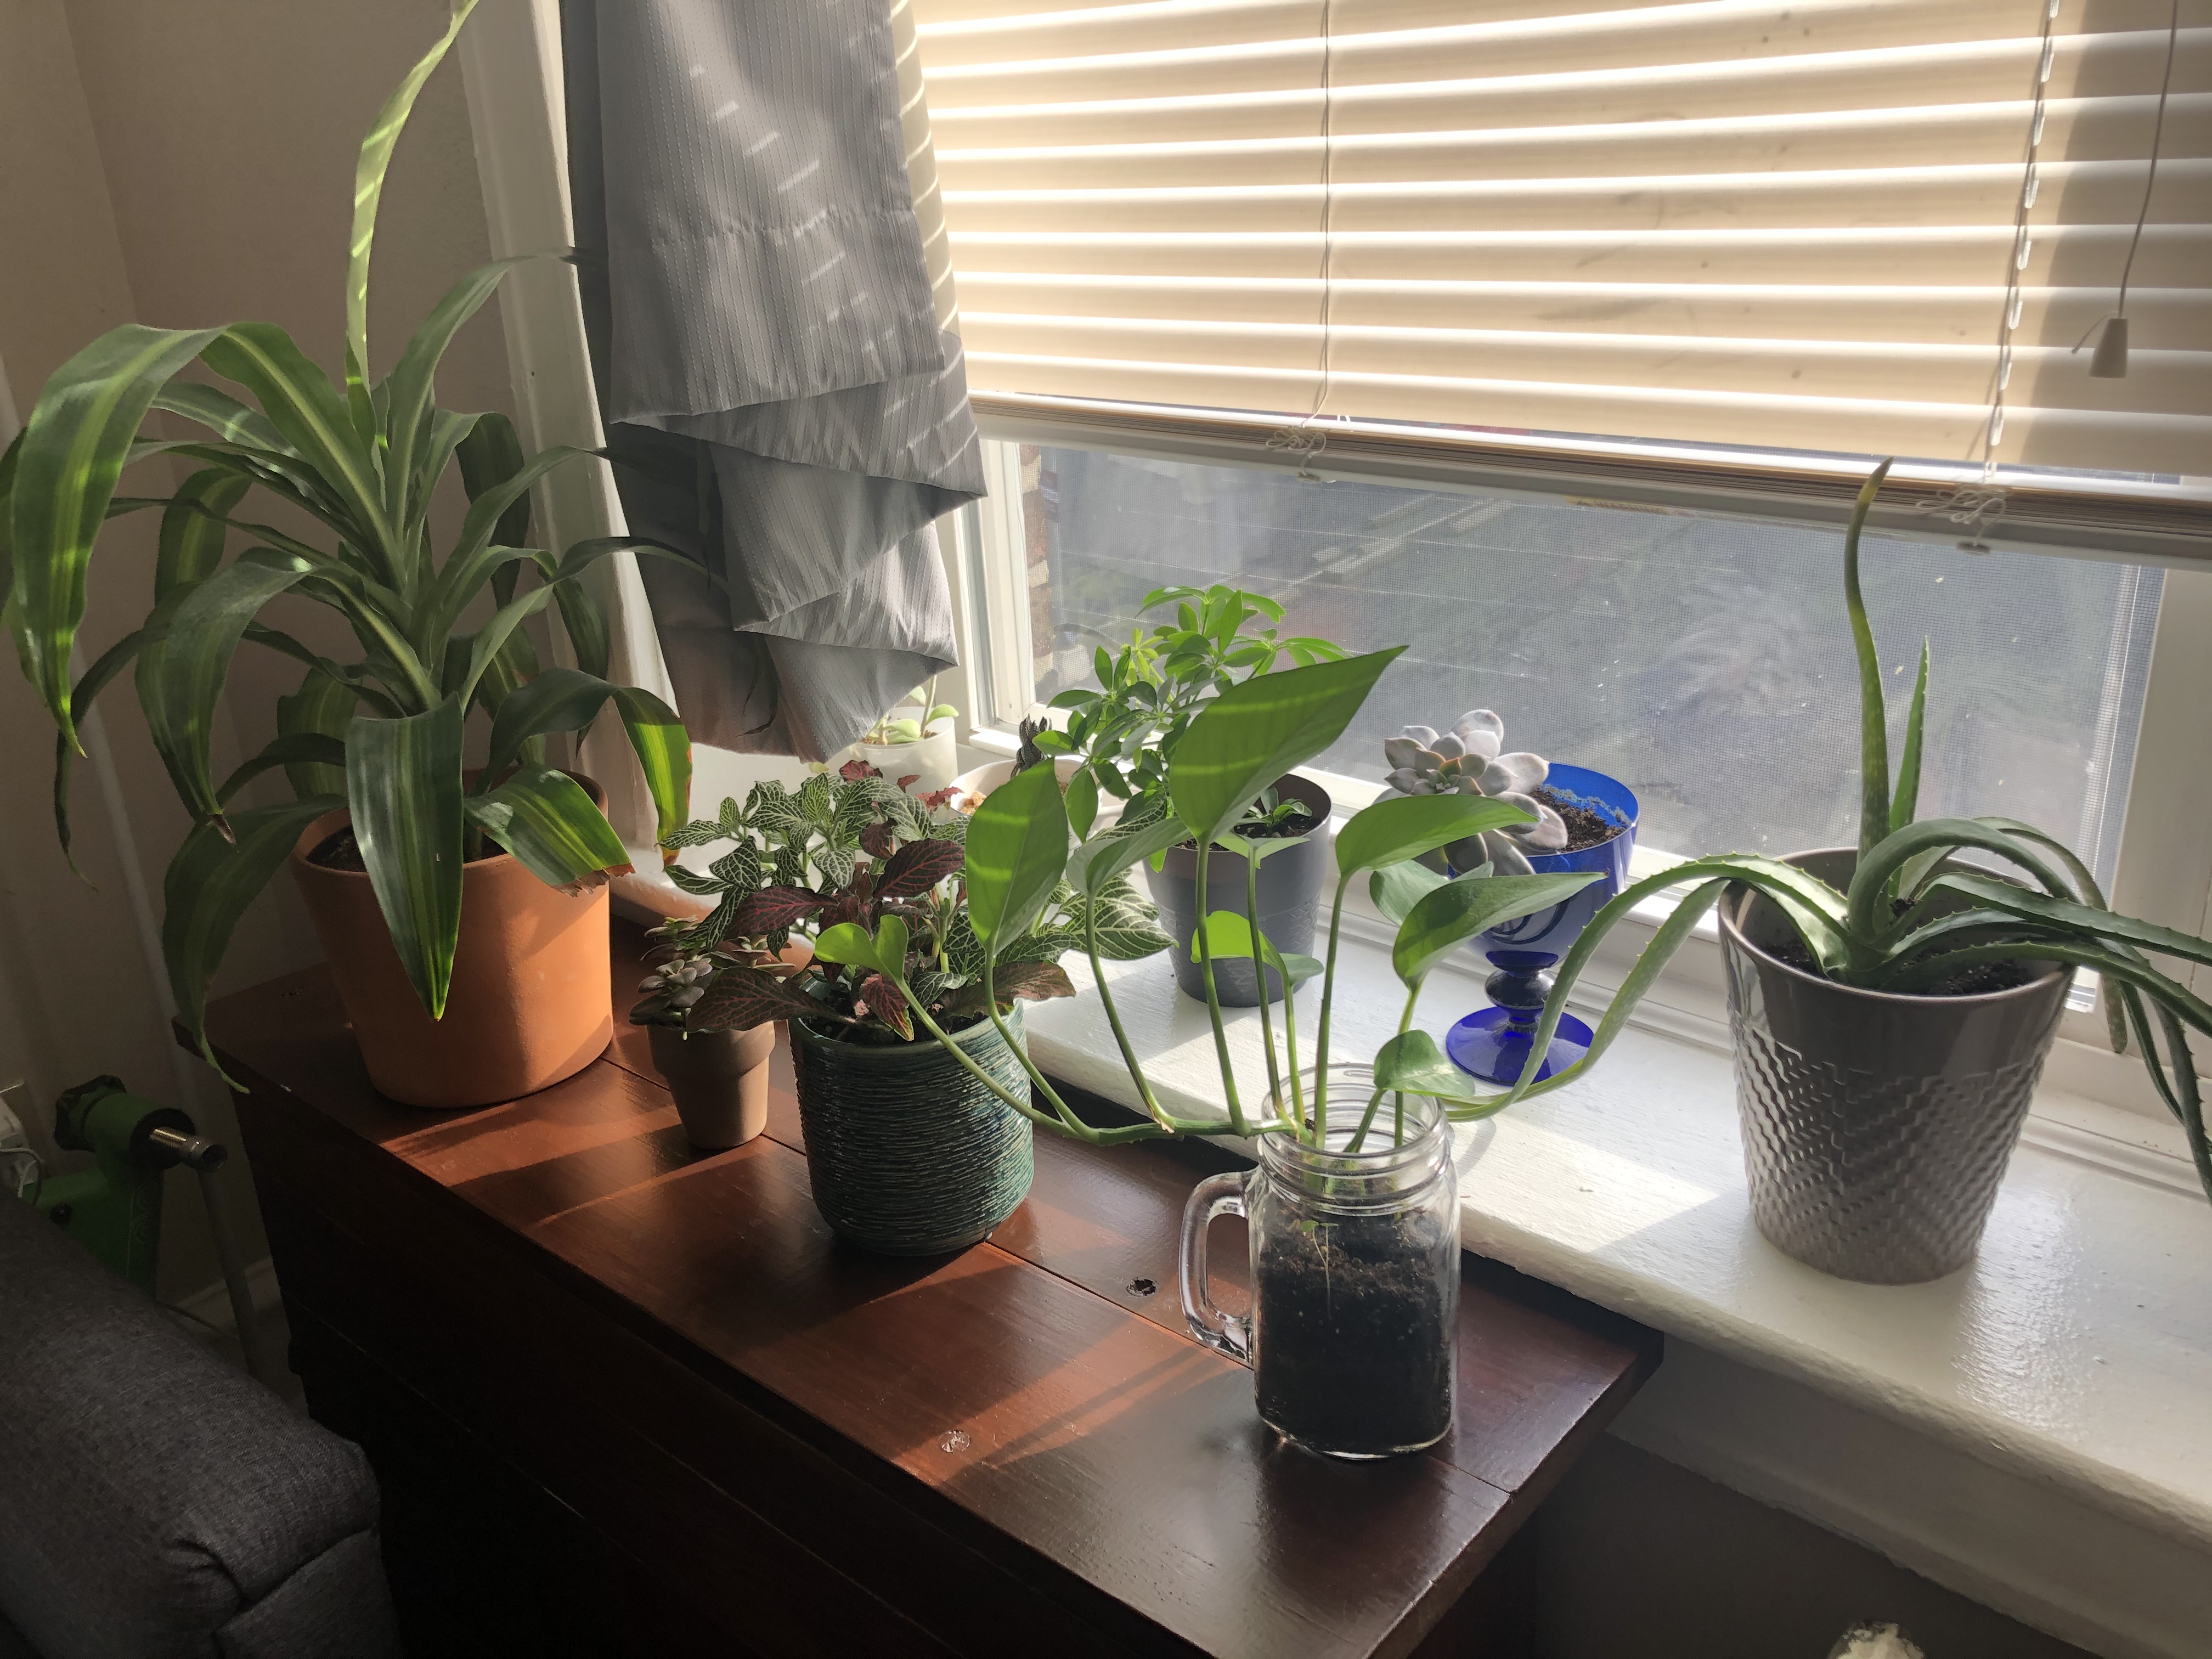 Various houseplants on a shelf and windowsill